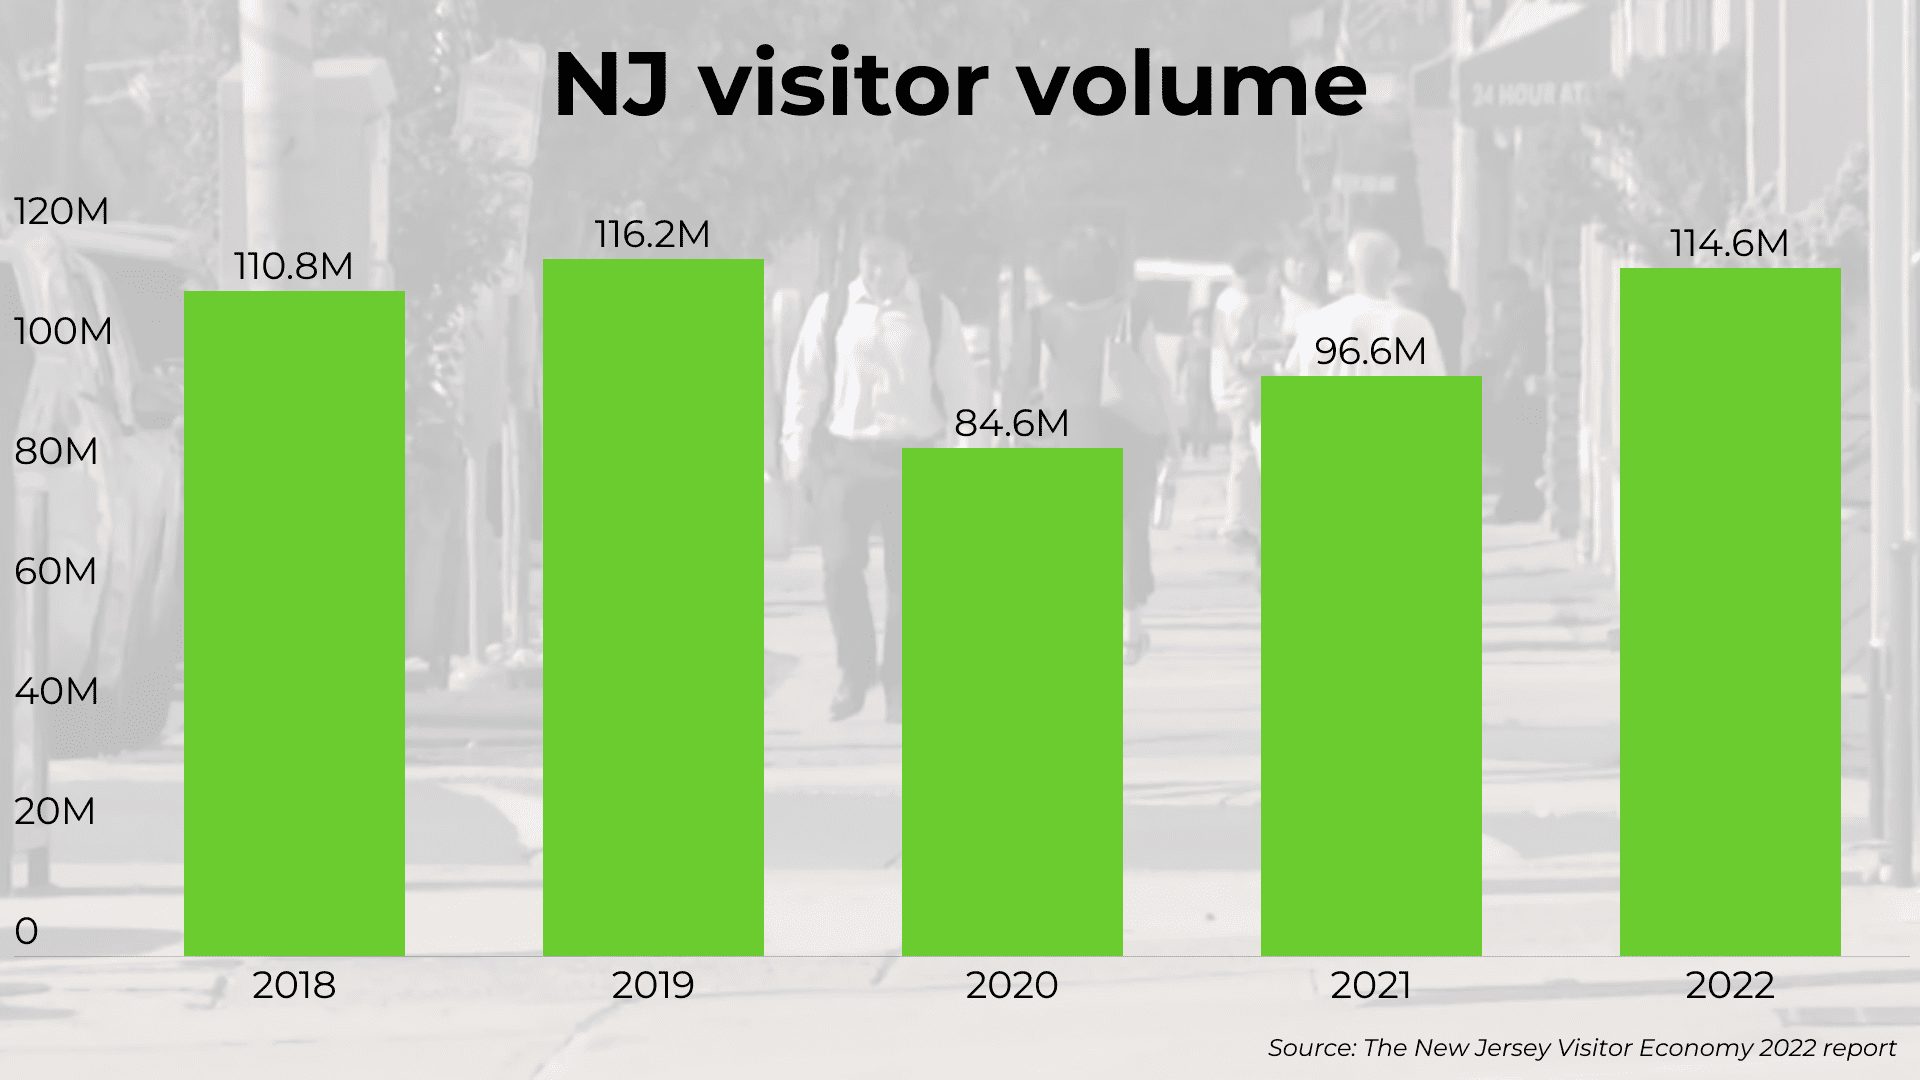 NJ tourism rebounds after pandemic peaks